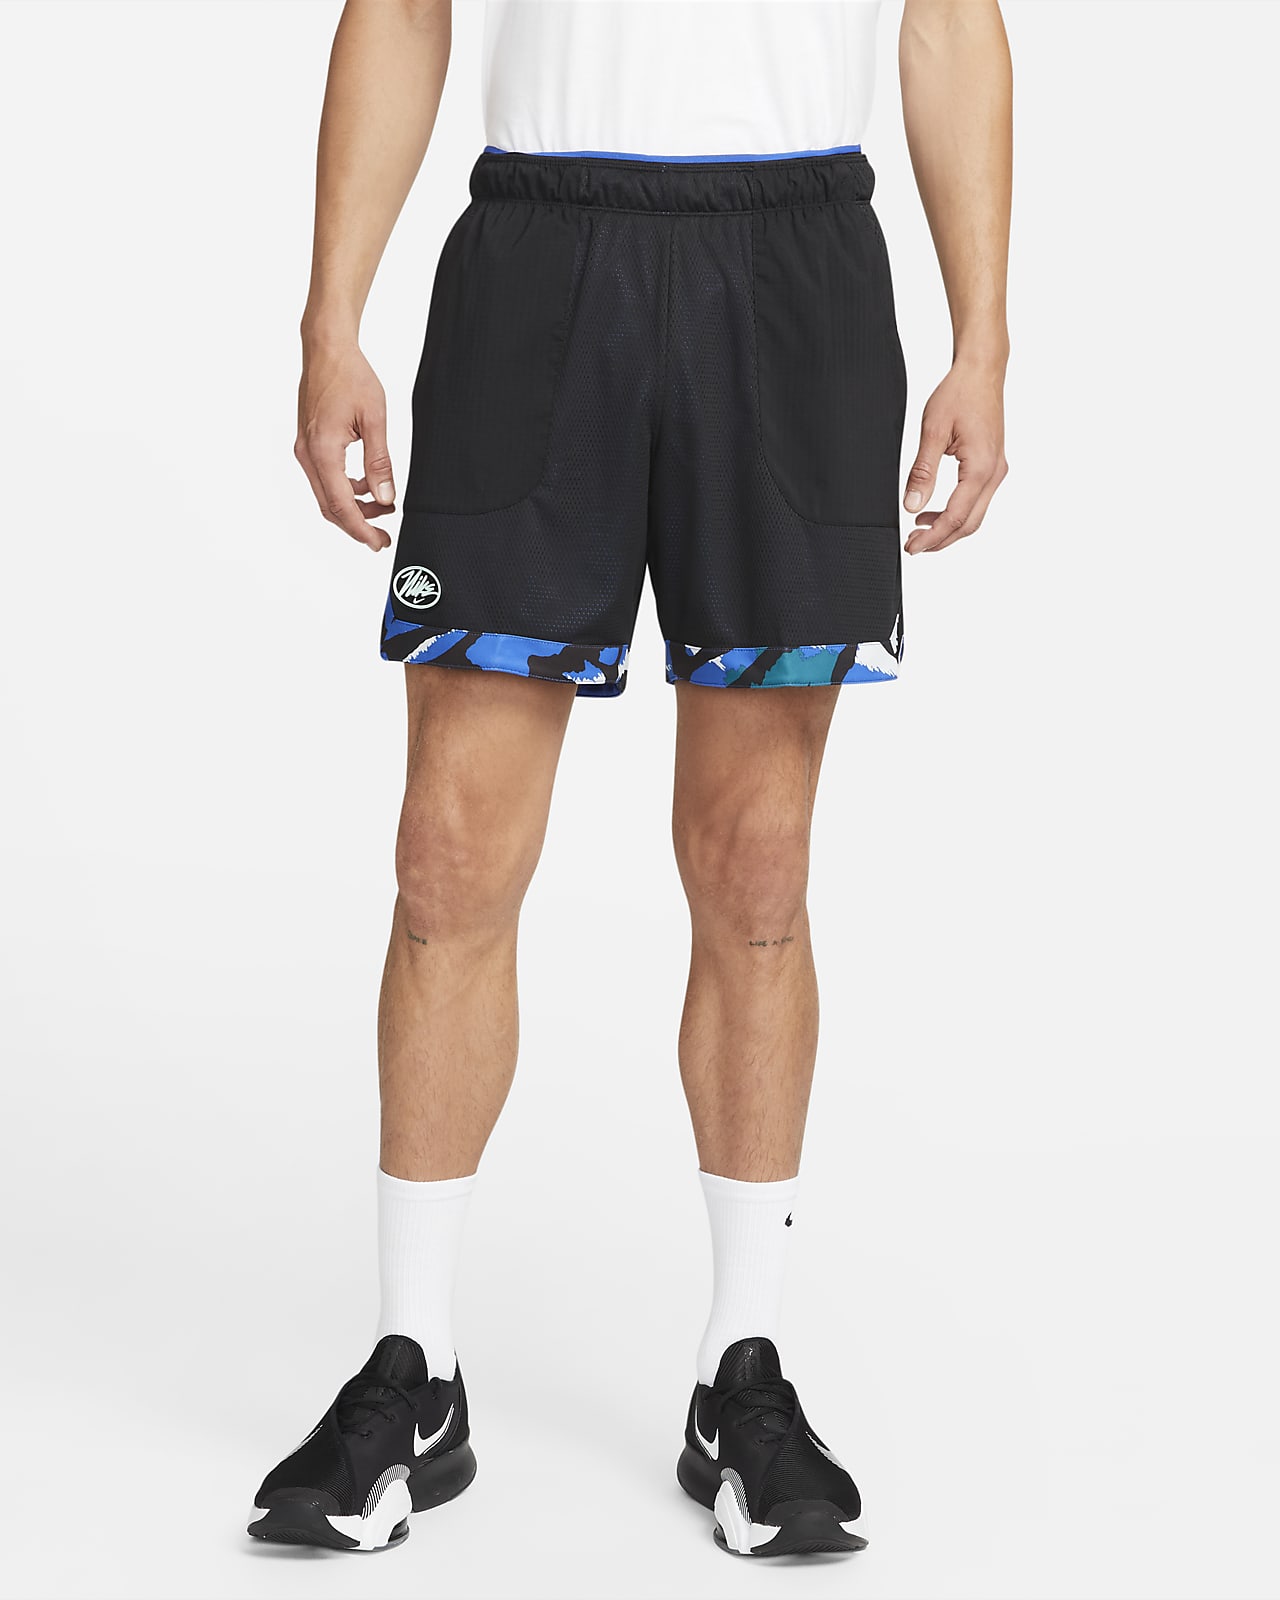 Nike Sport Clash Men's Training Shorts